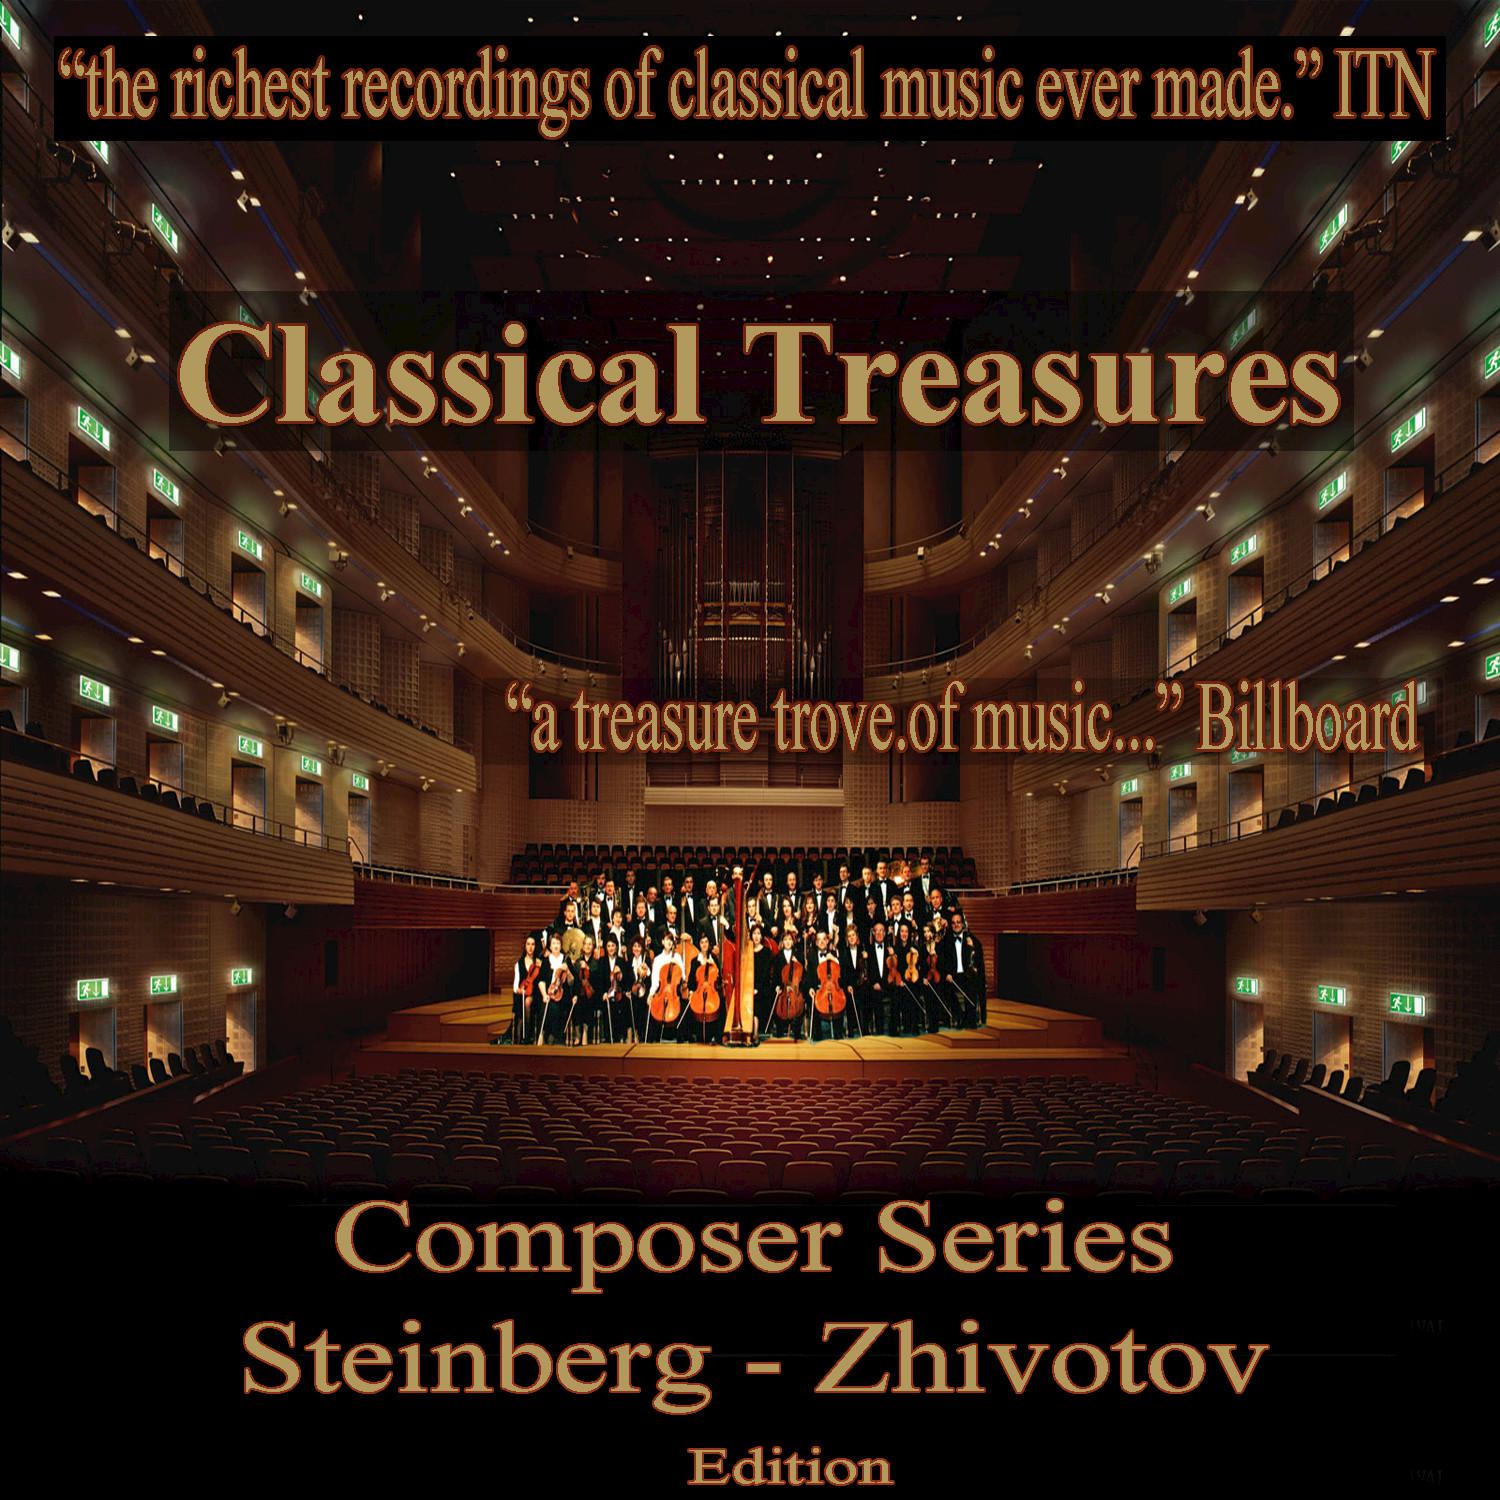 Classical Treasures Composer Series: Steinberg - Zhivotov